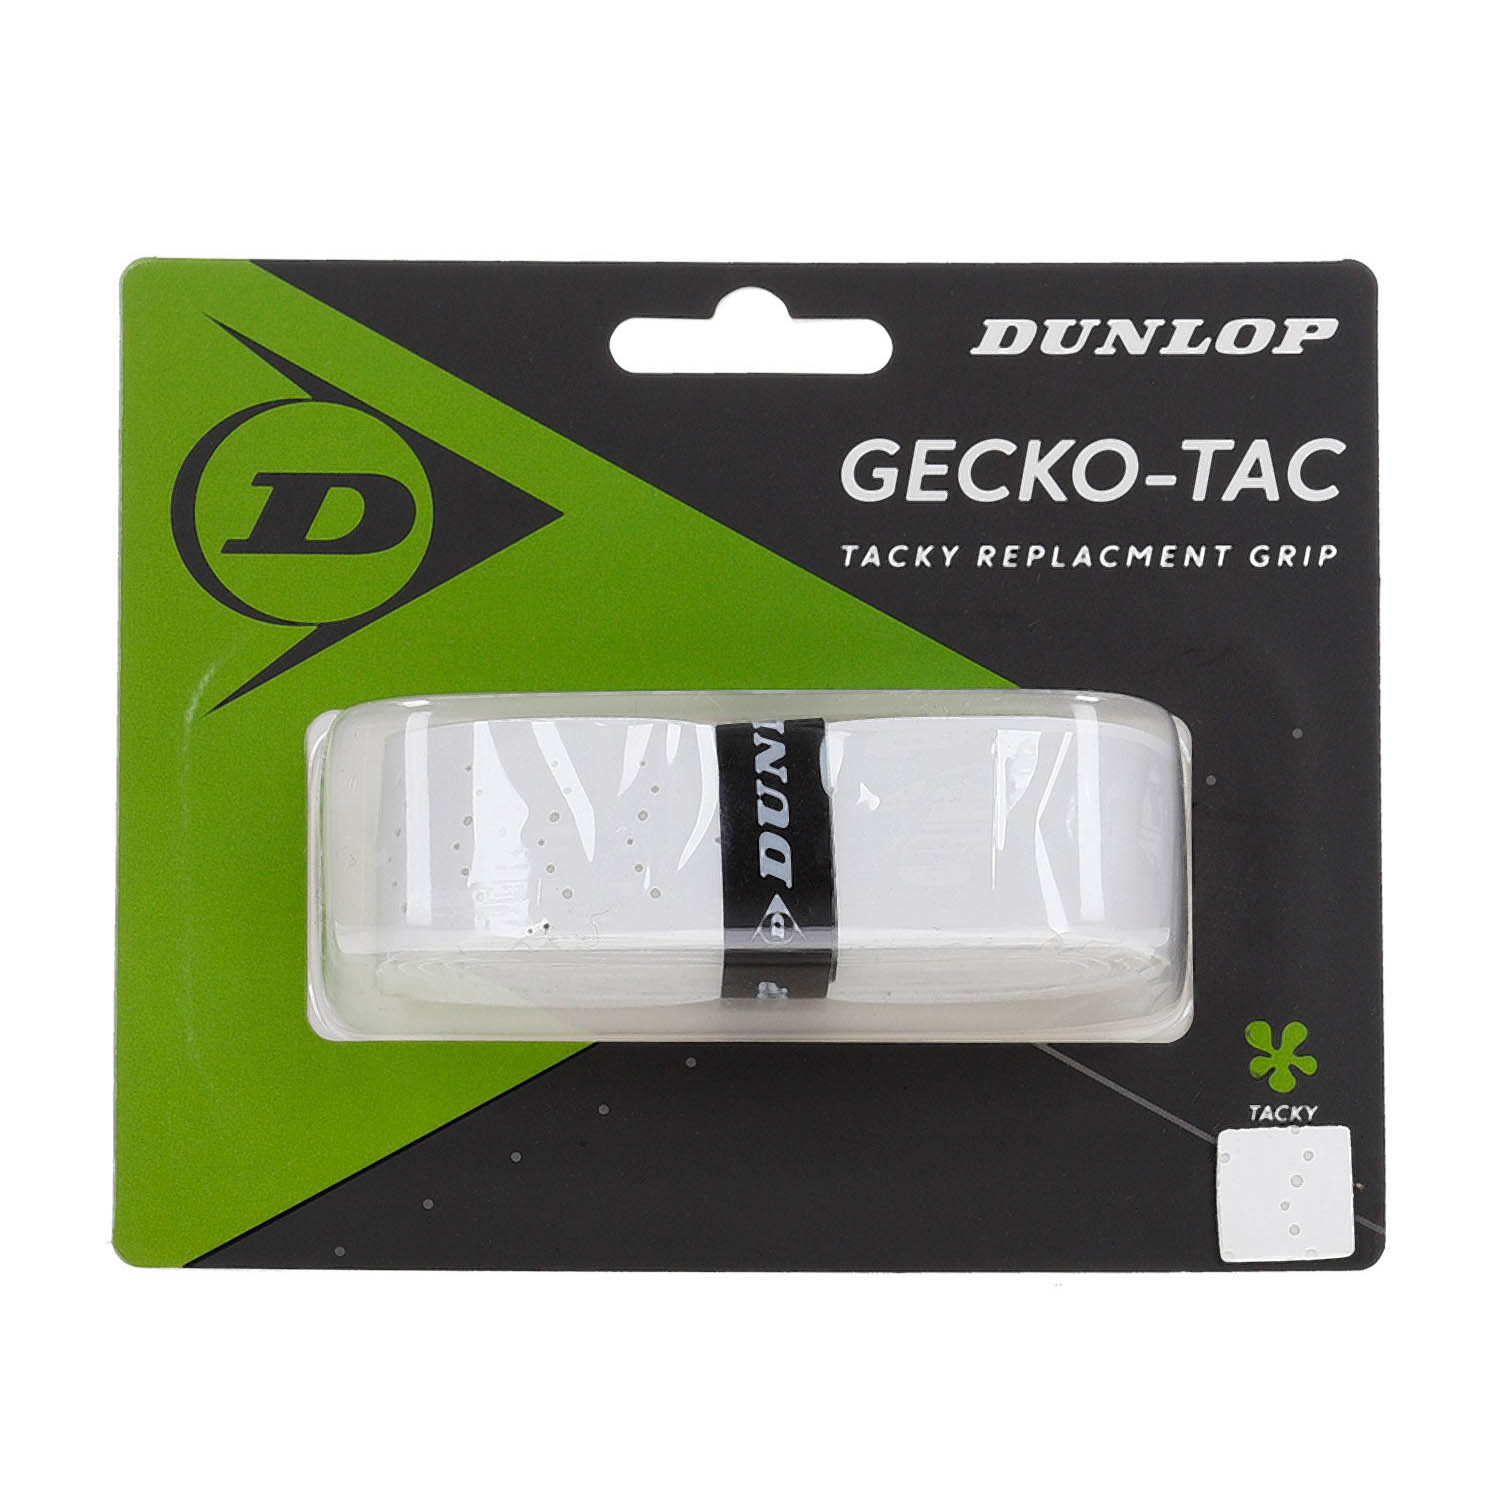 Dunlop Gecko-Tac Grips - White